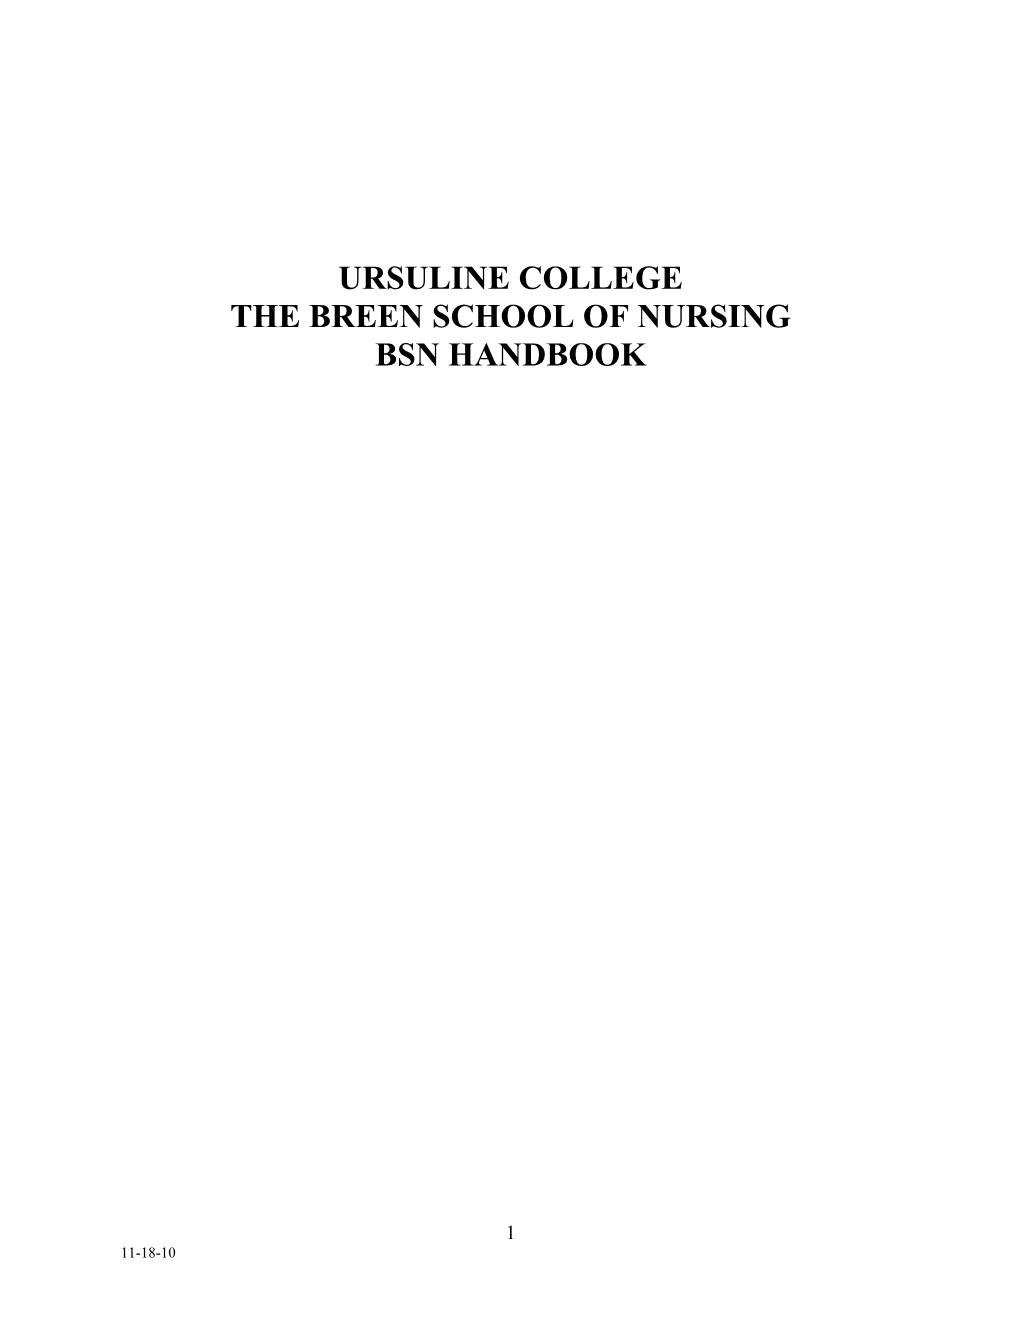 The Breen School of Nursing